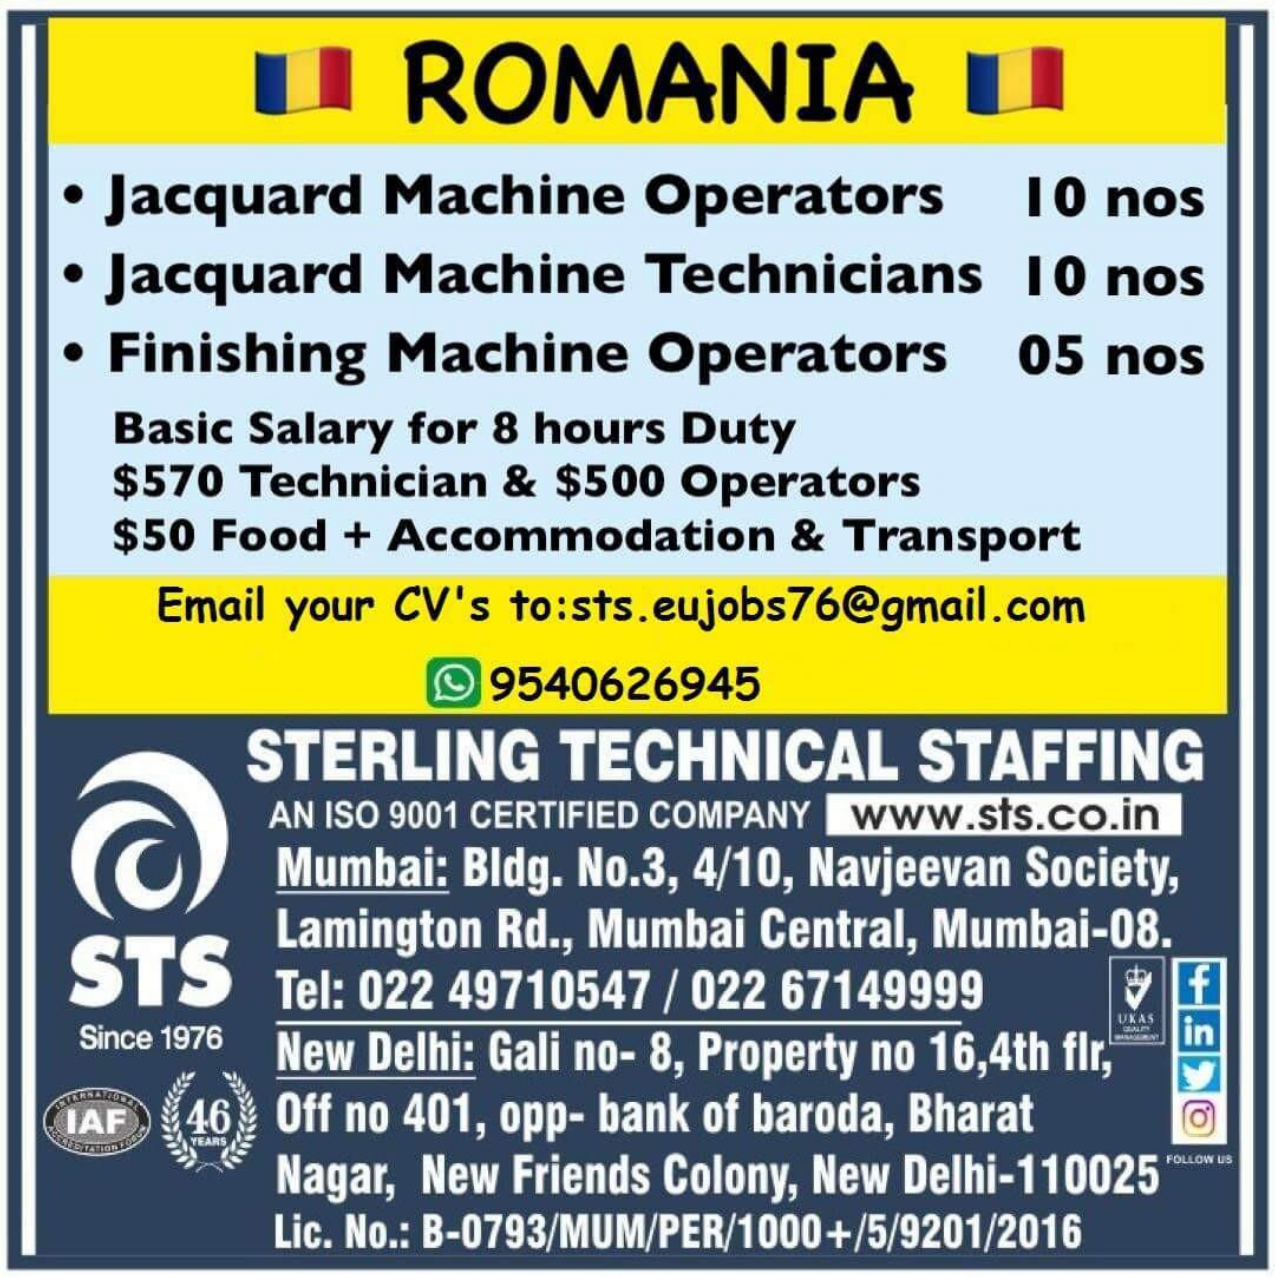 Hiring for Romania